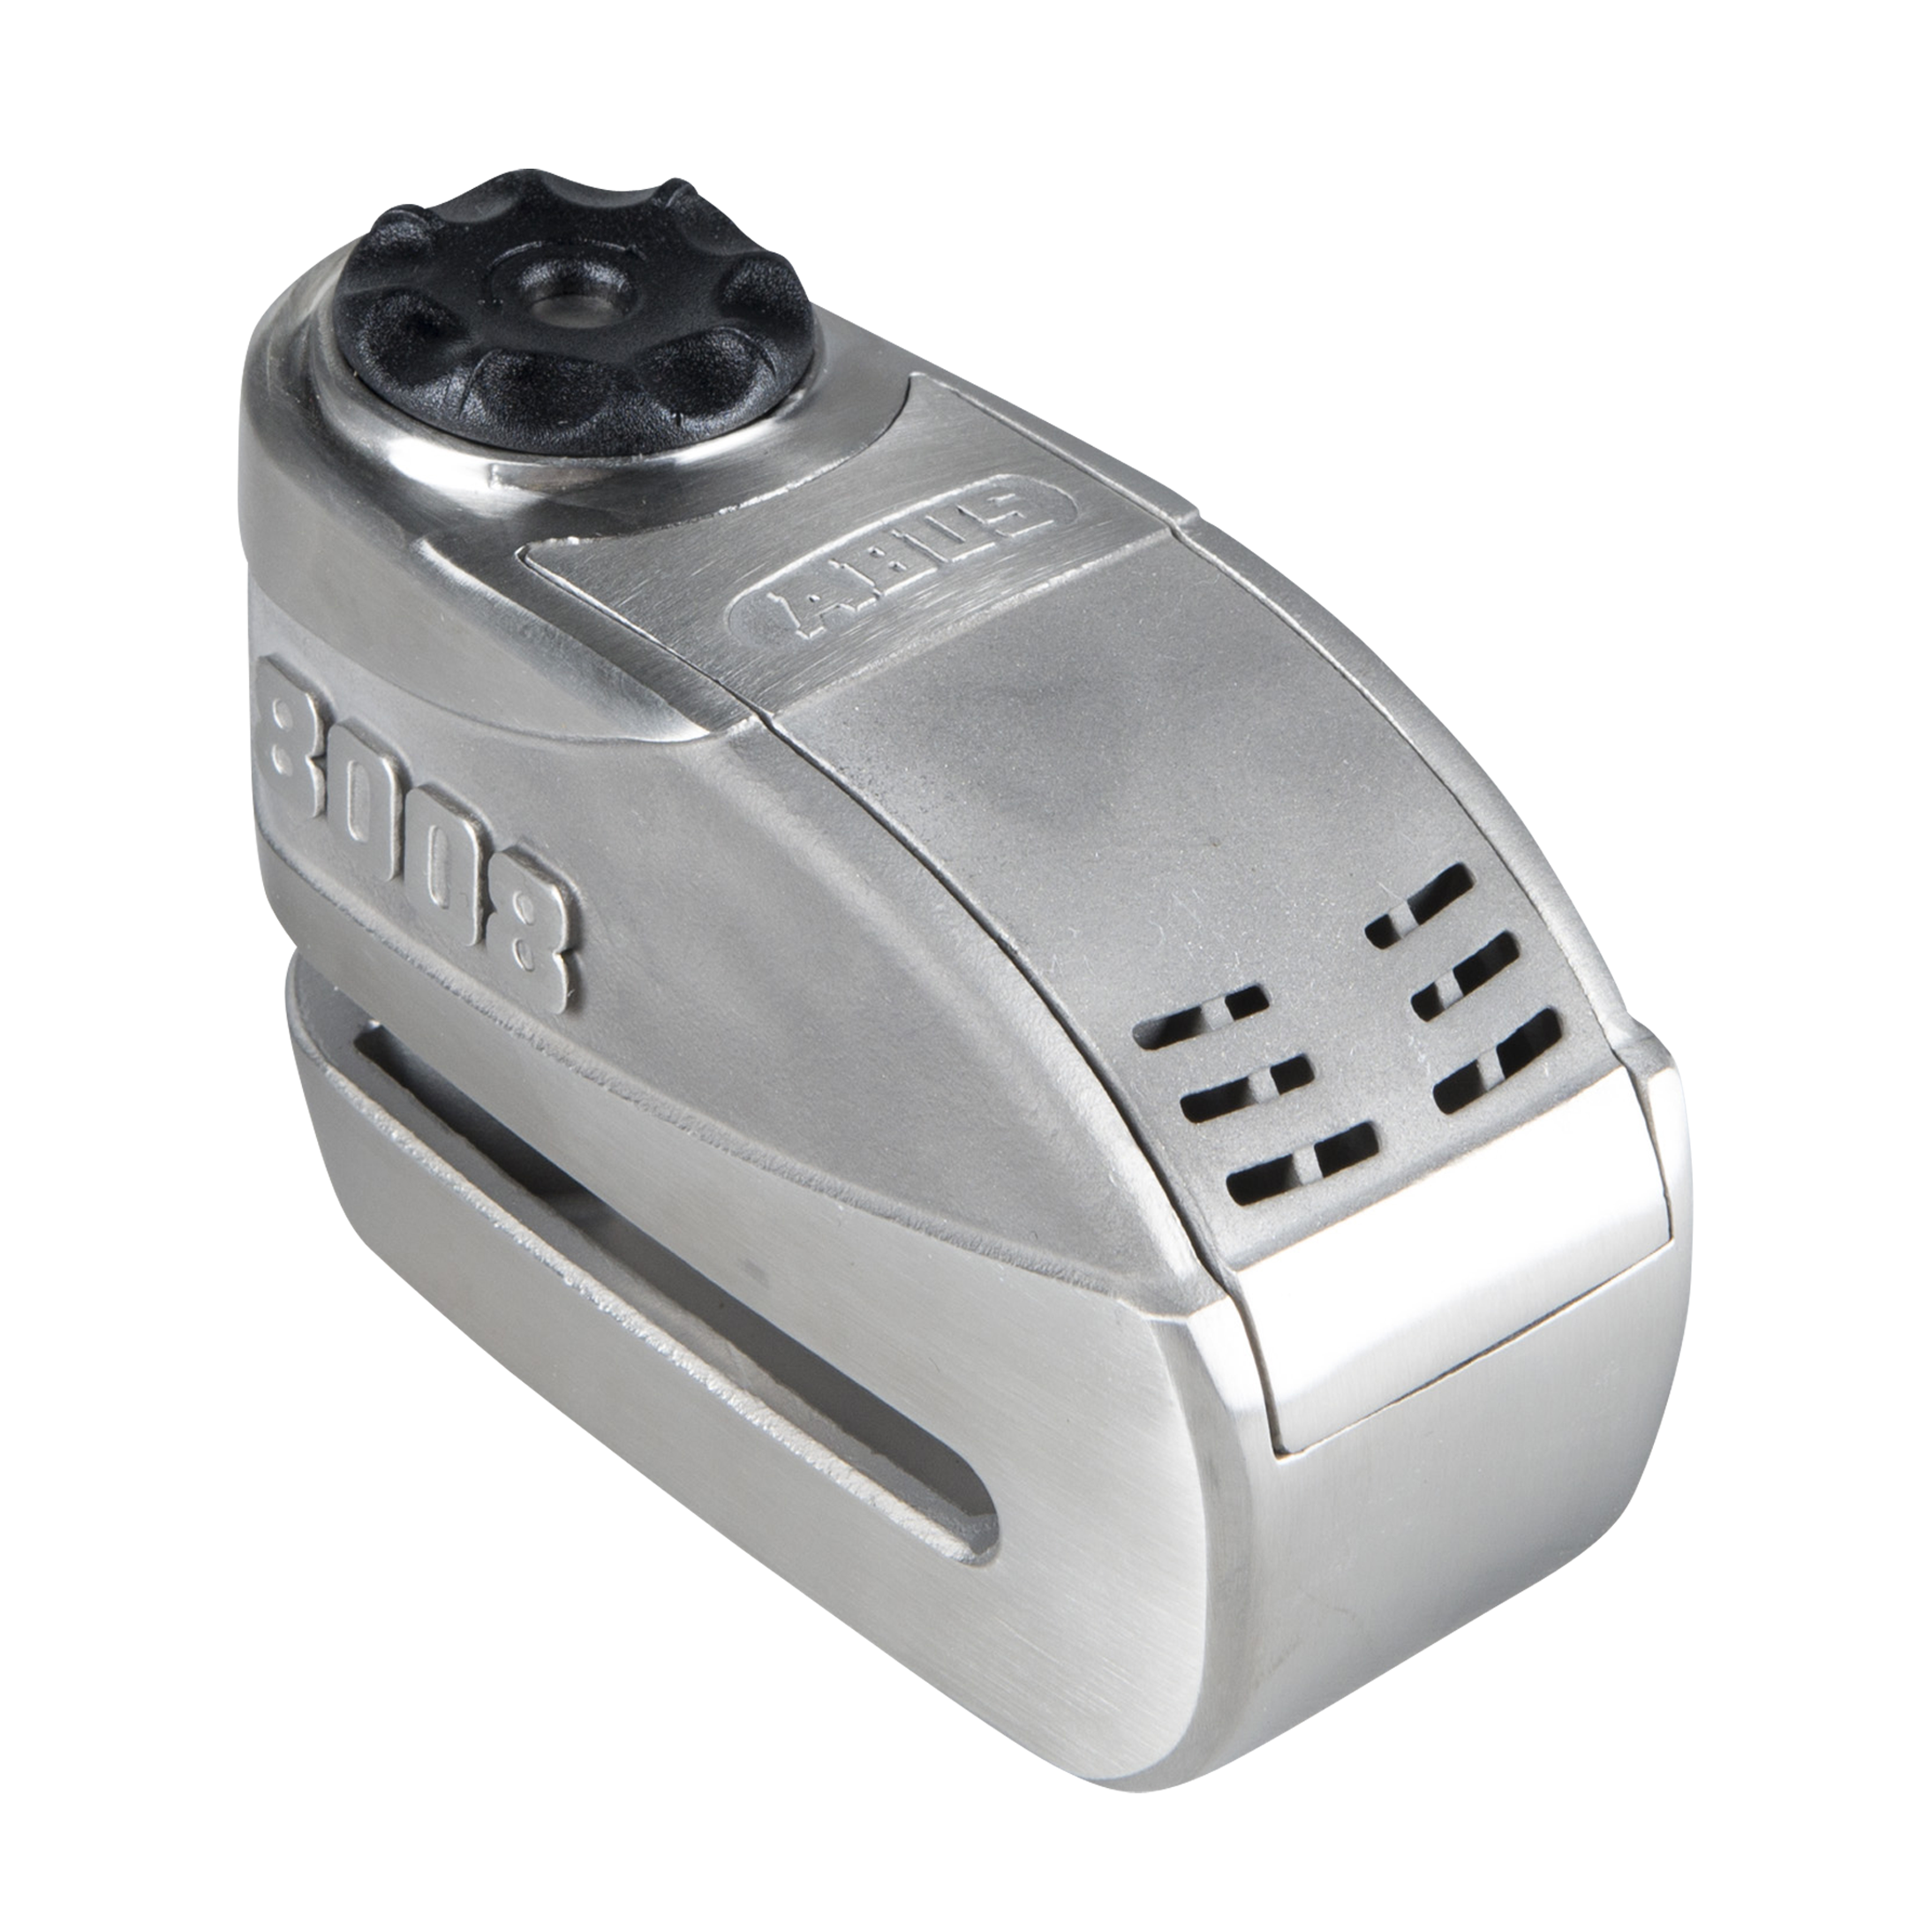 ABUS Granit Detecto 8008 Brake Disc Lock with Alarm - Now 20